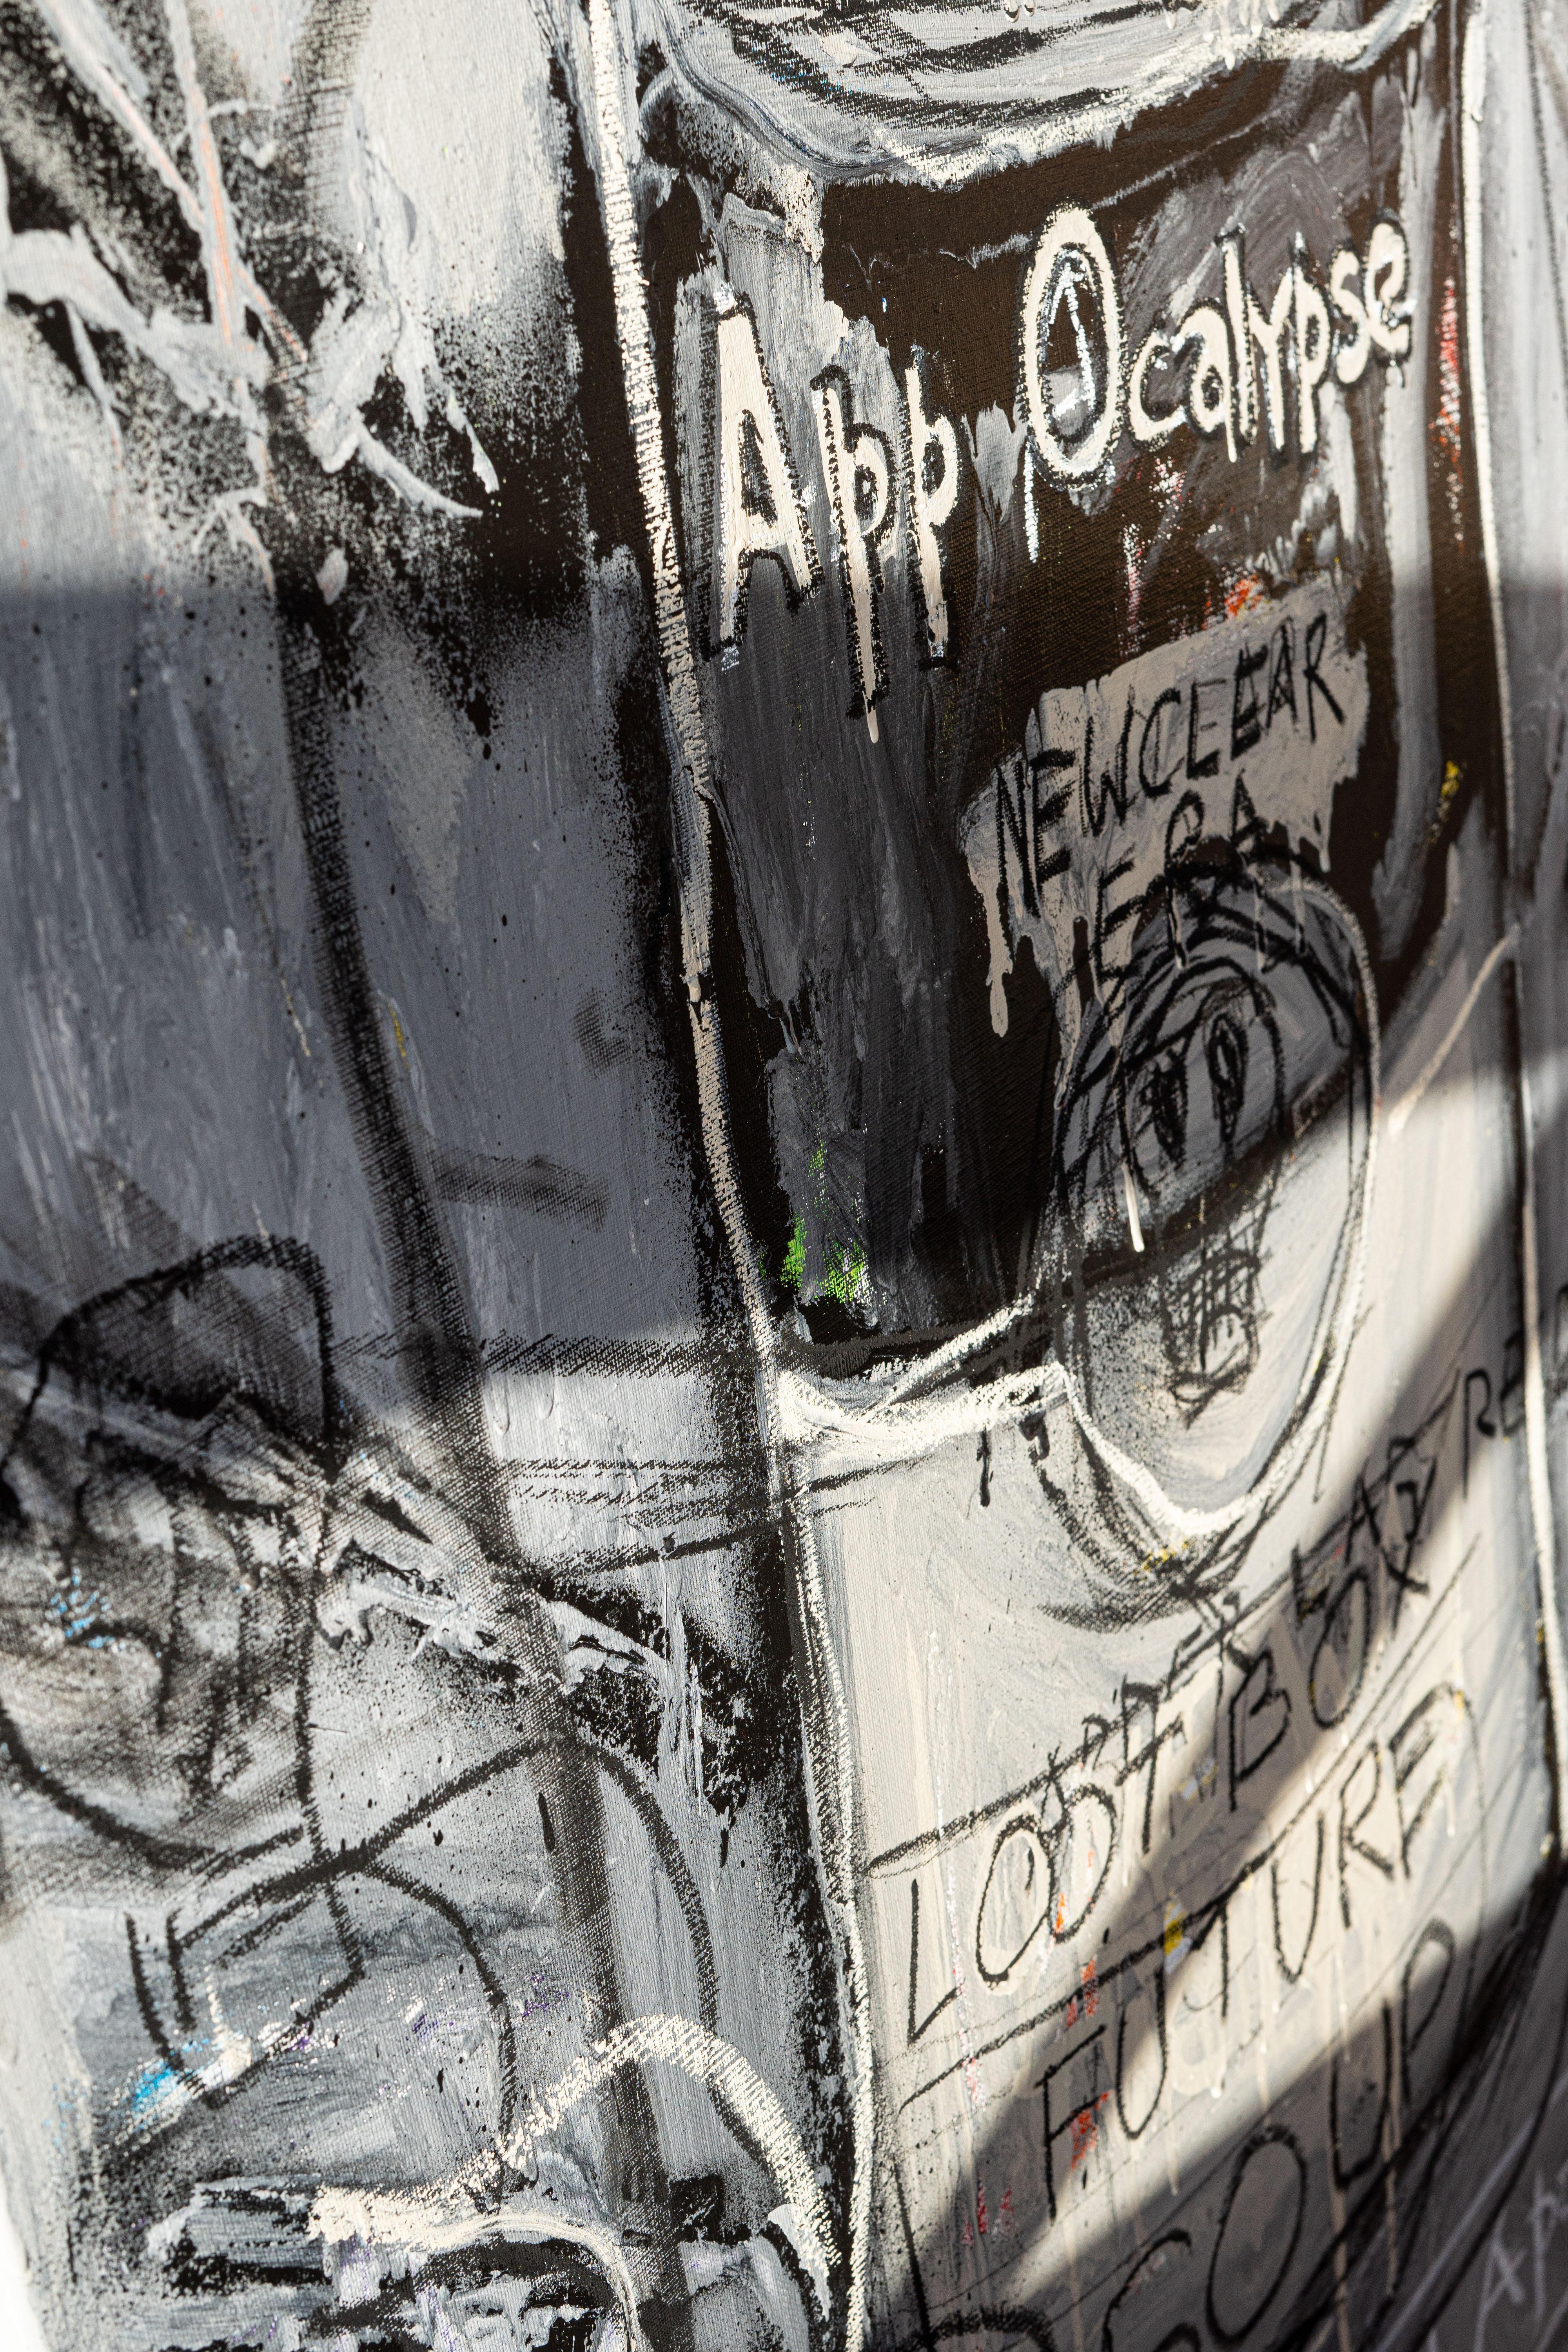 App Ocalypse - Art urbain Painting par Diego Tirigall